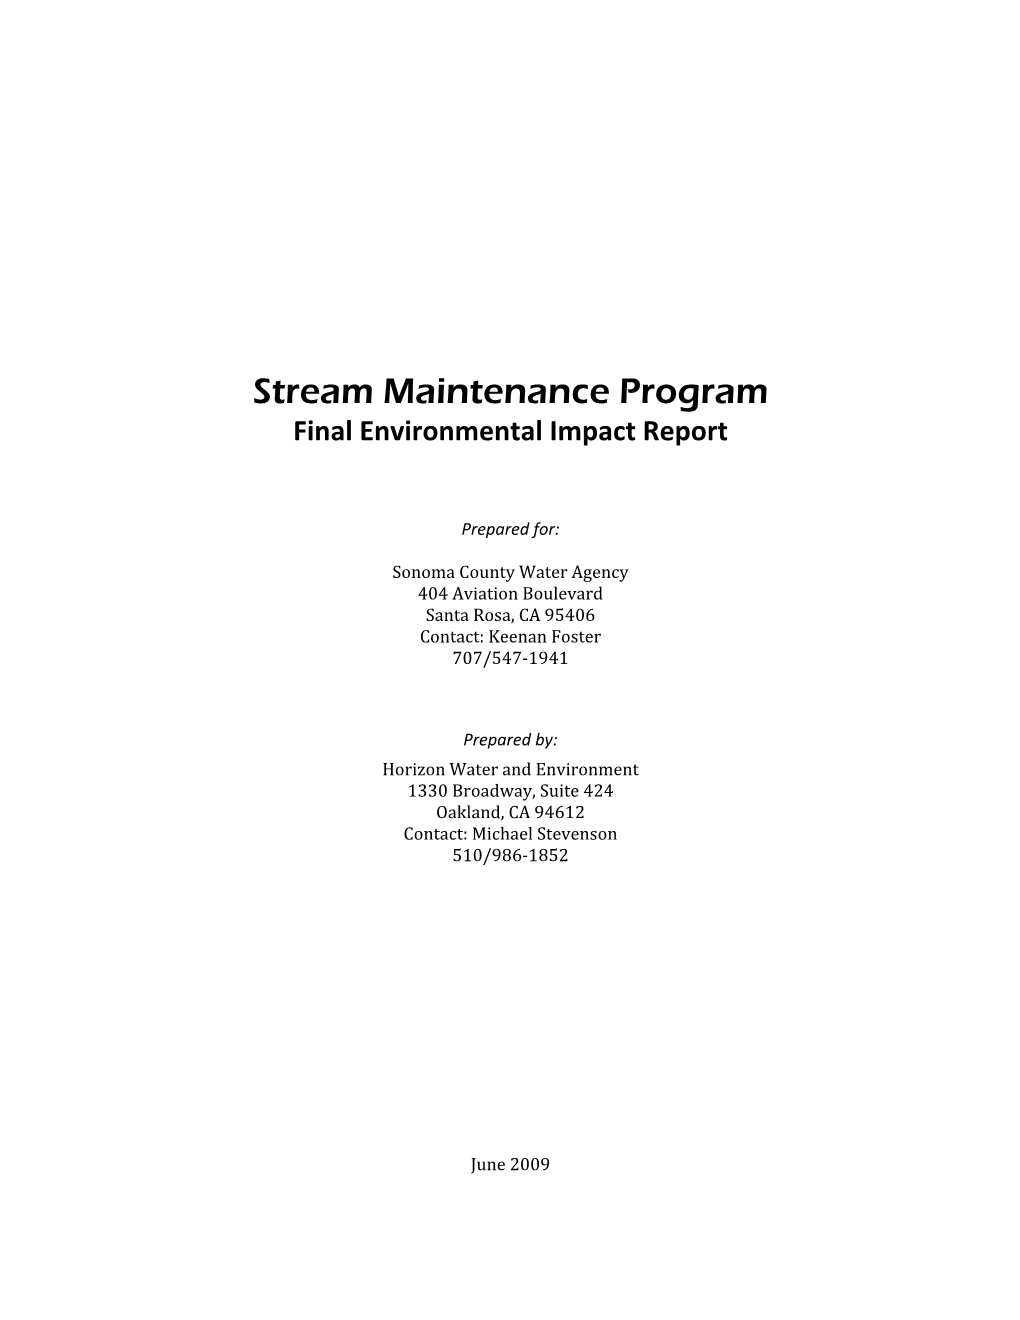 Stream Maintenance Program Final Environmental Impact Report